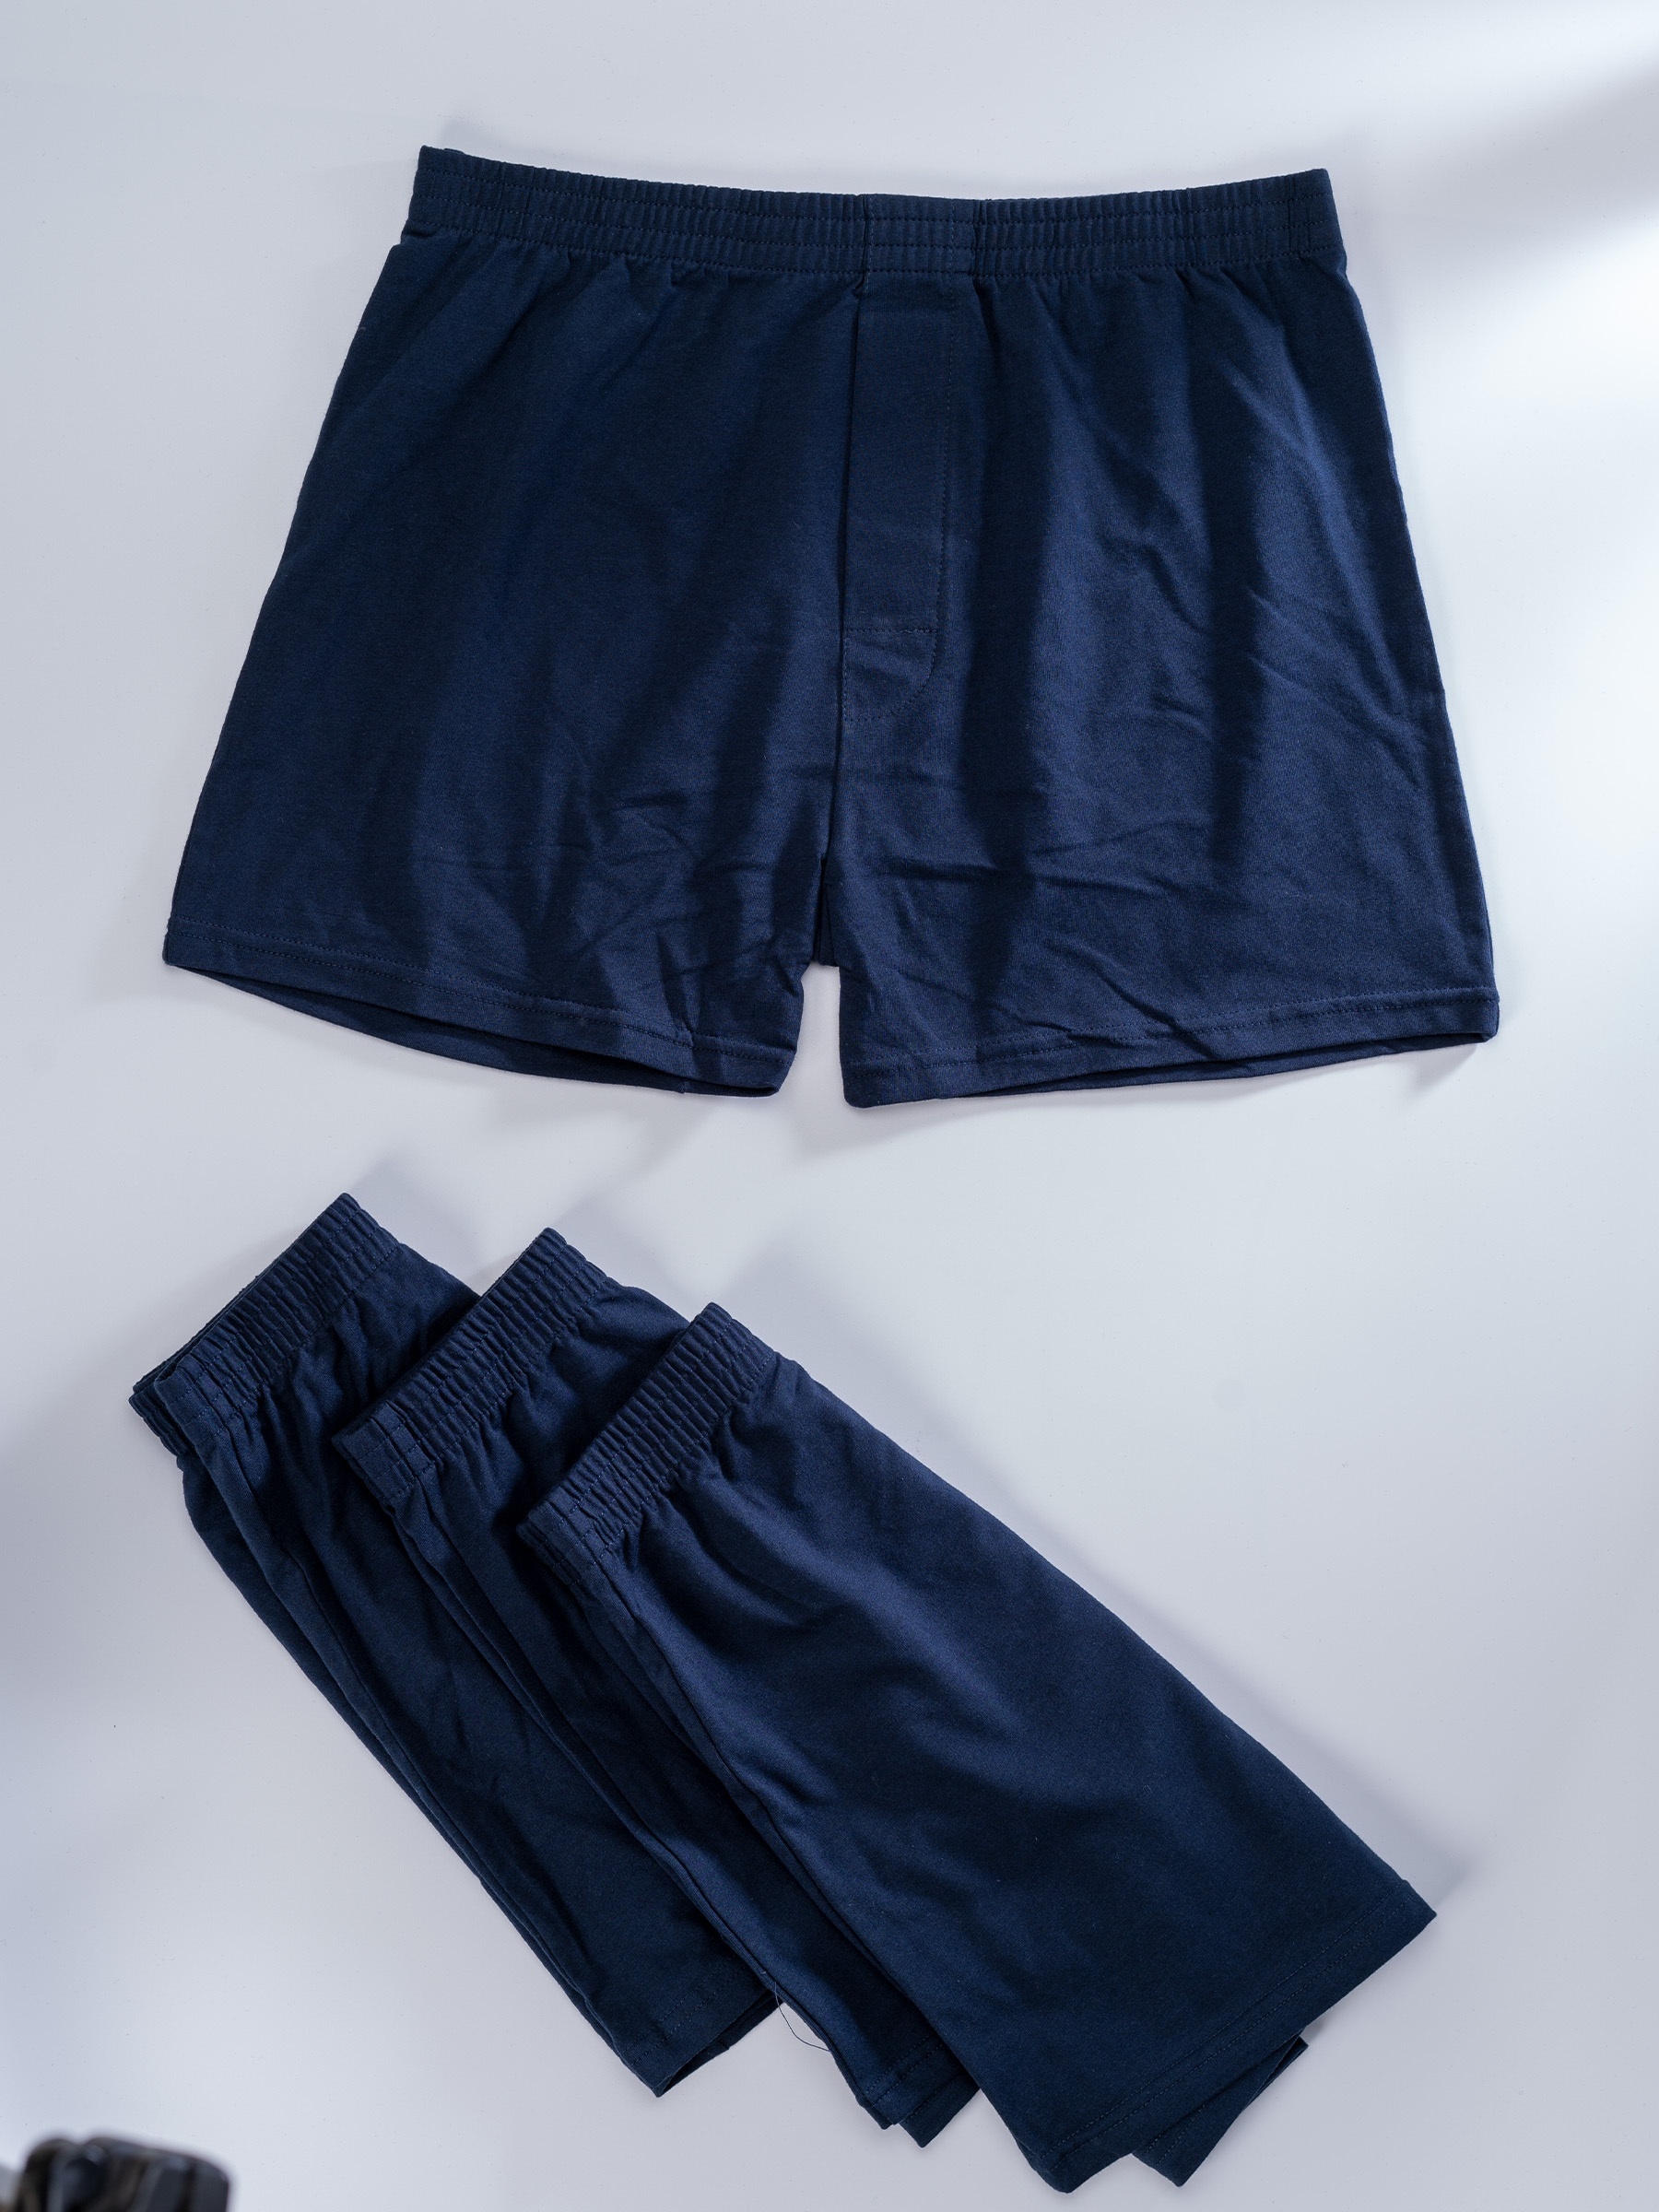 Men's Loose Fit Arrow Pants Panties Comfortable Boxer Shorts Home